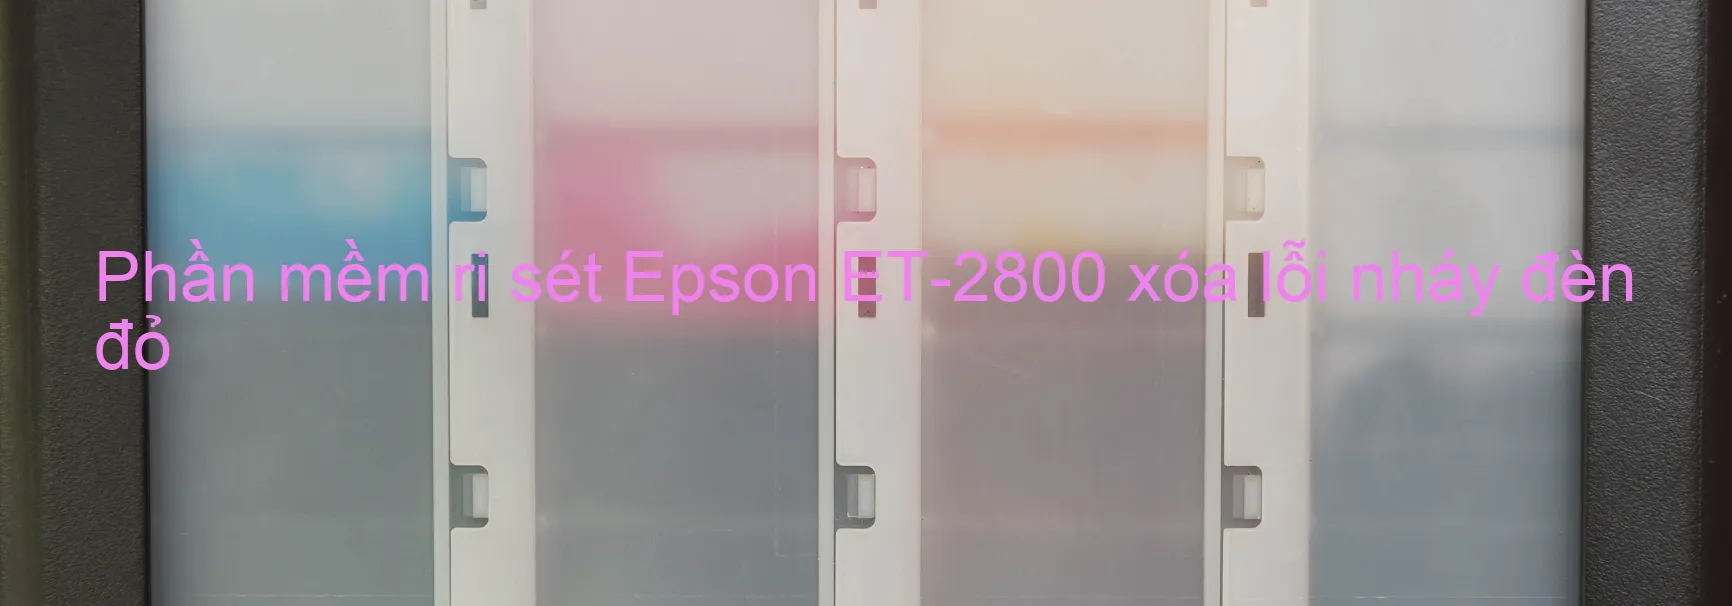 Phần mềm reset Epson ET-2800 xóa lỗi nháy đèn đỏ